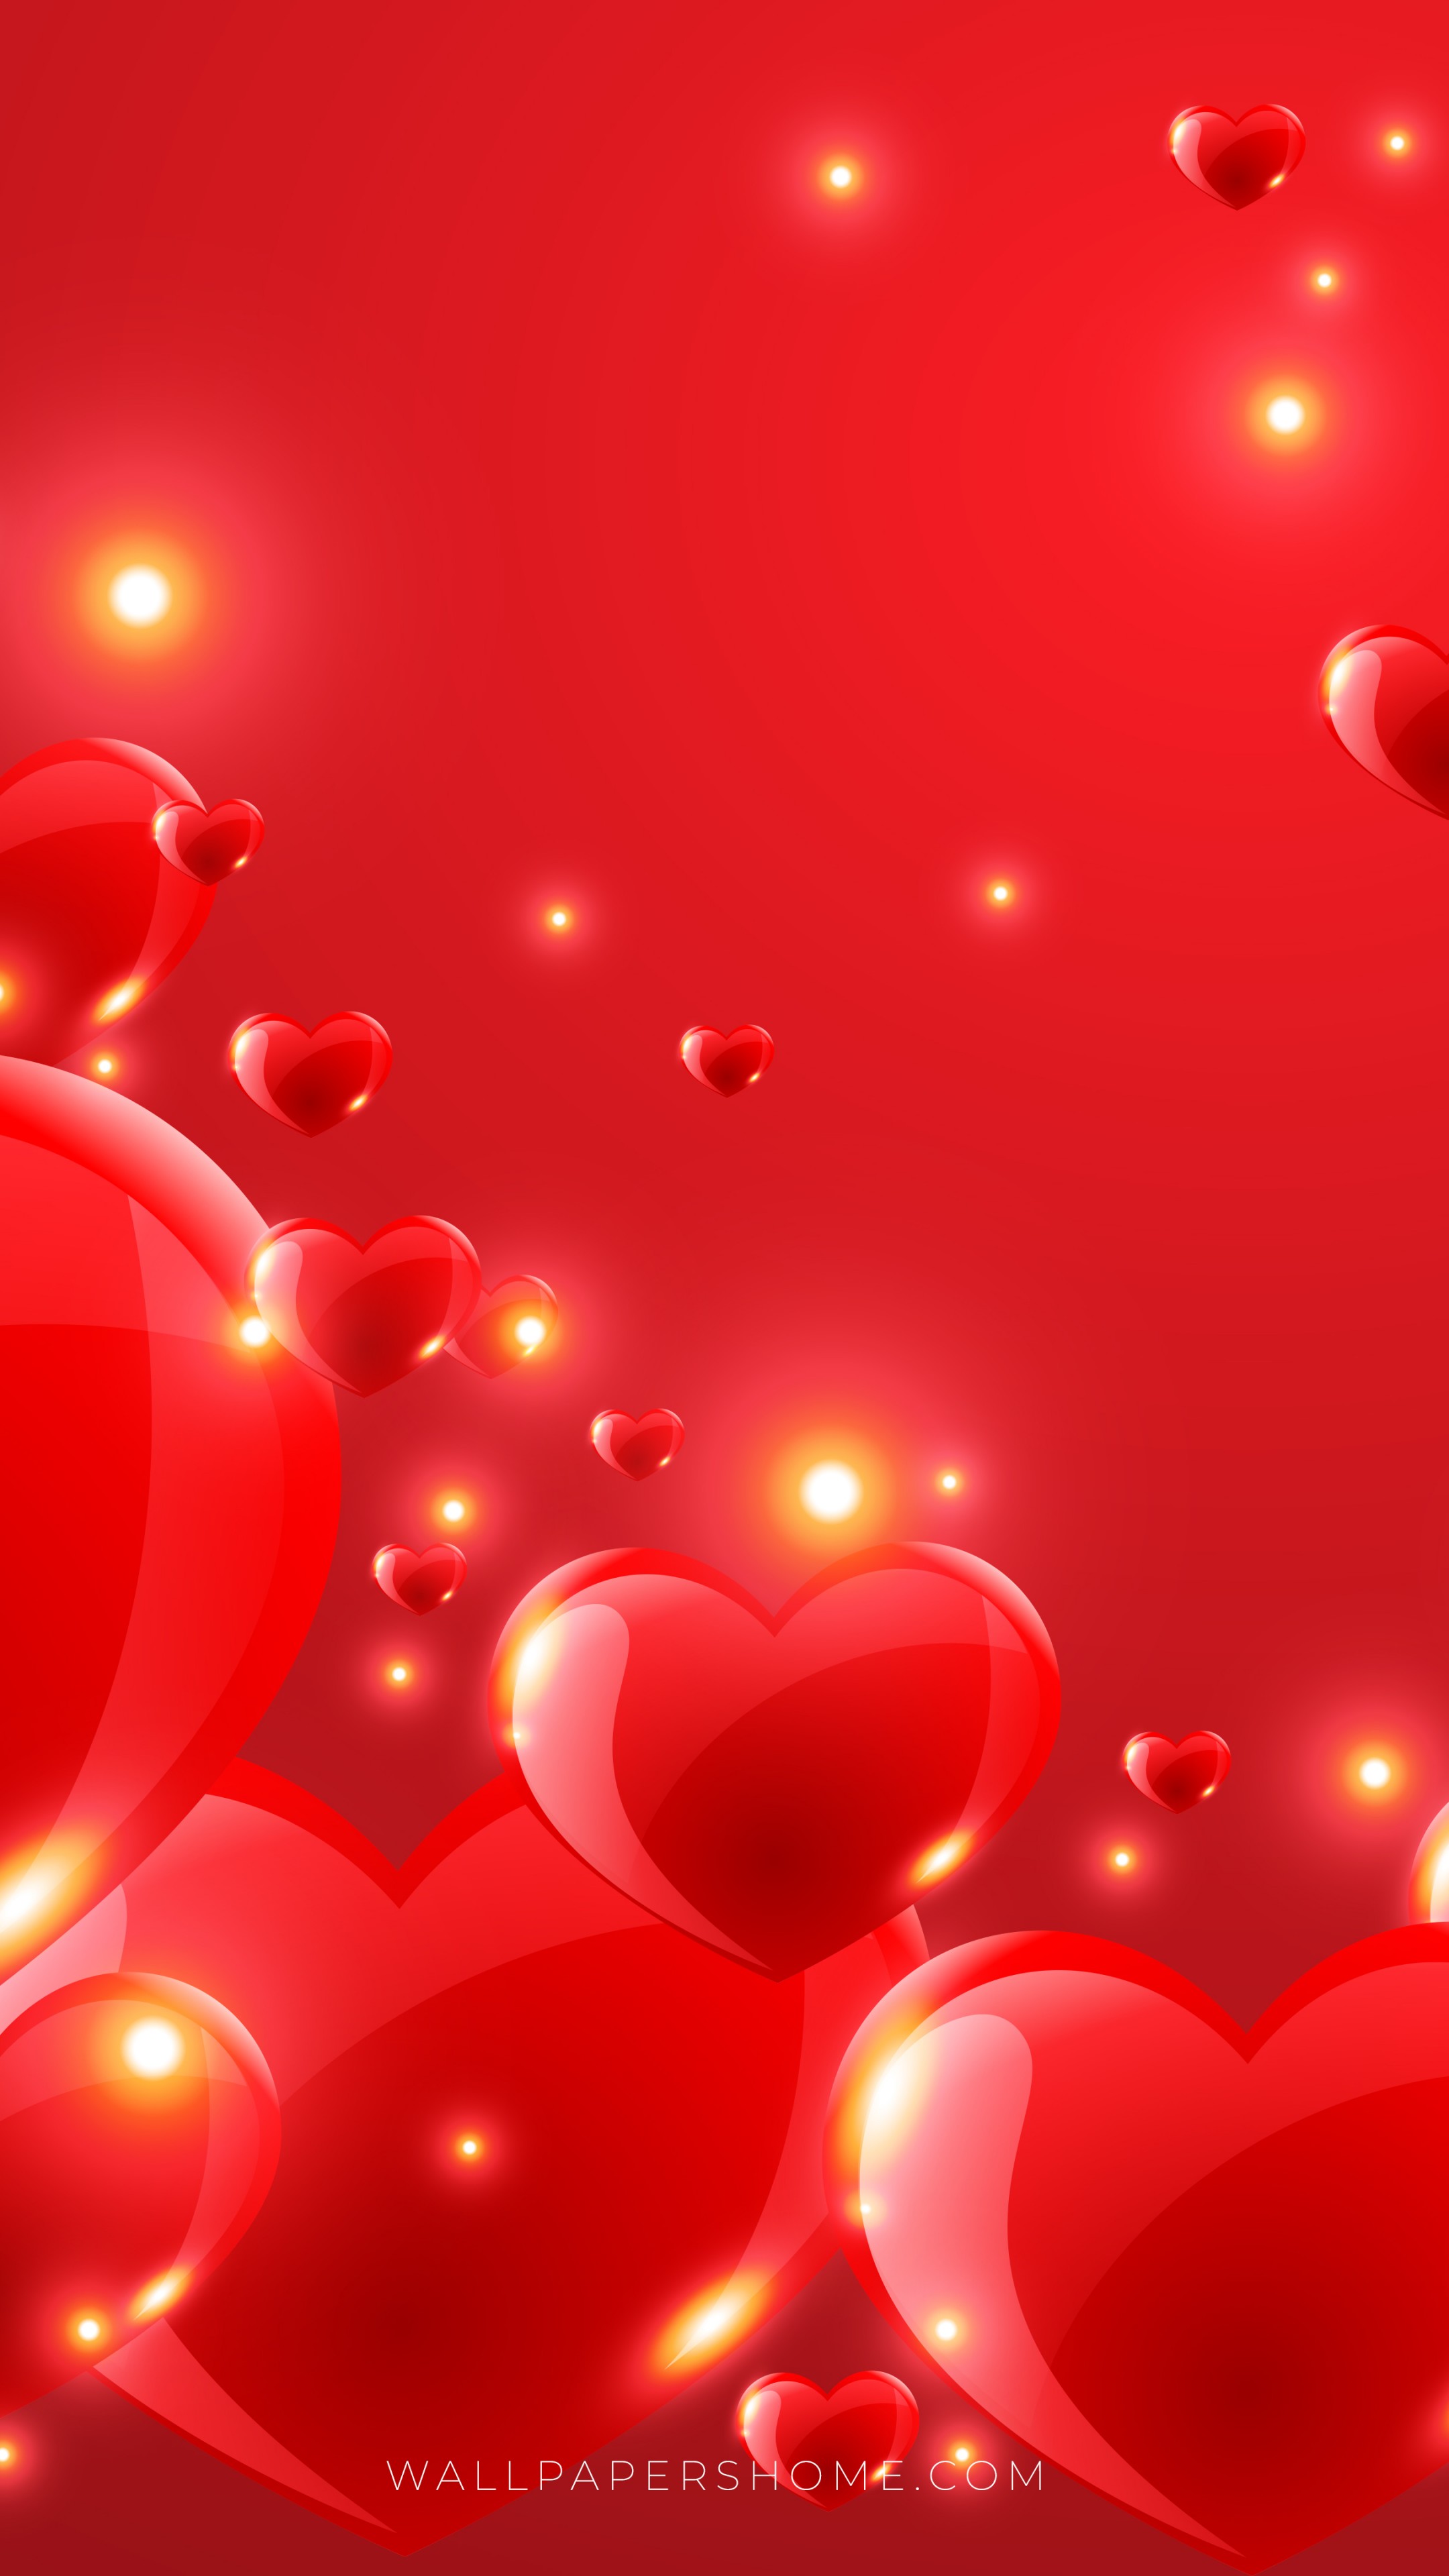 Wallpaper Valentine's Day, love image, heart, 8k, Holidays